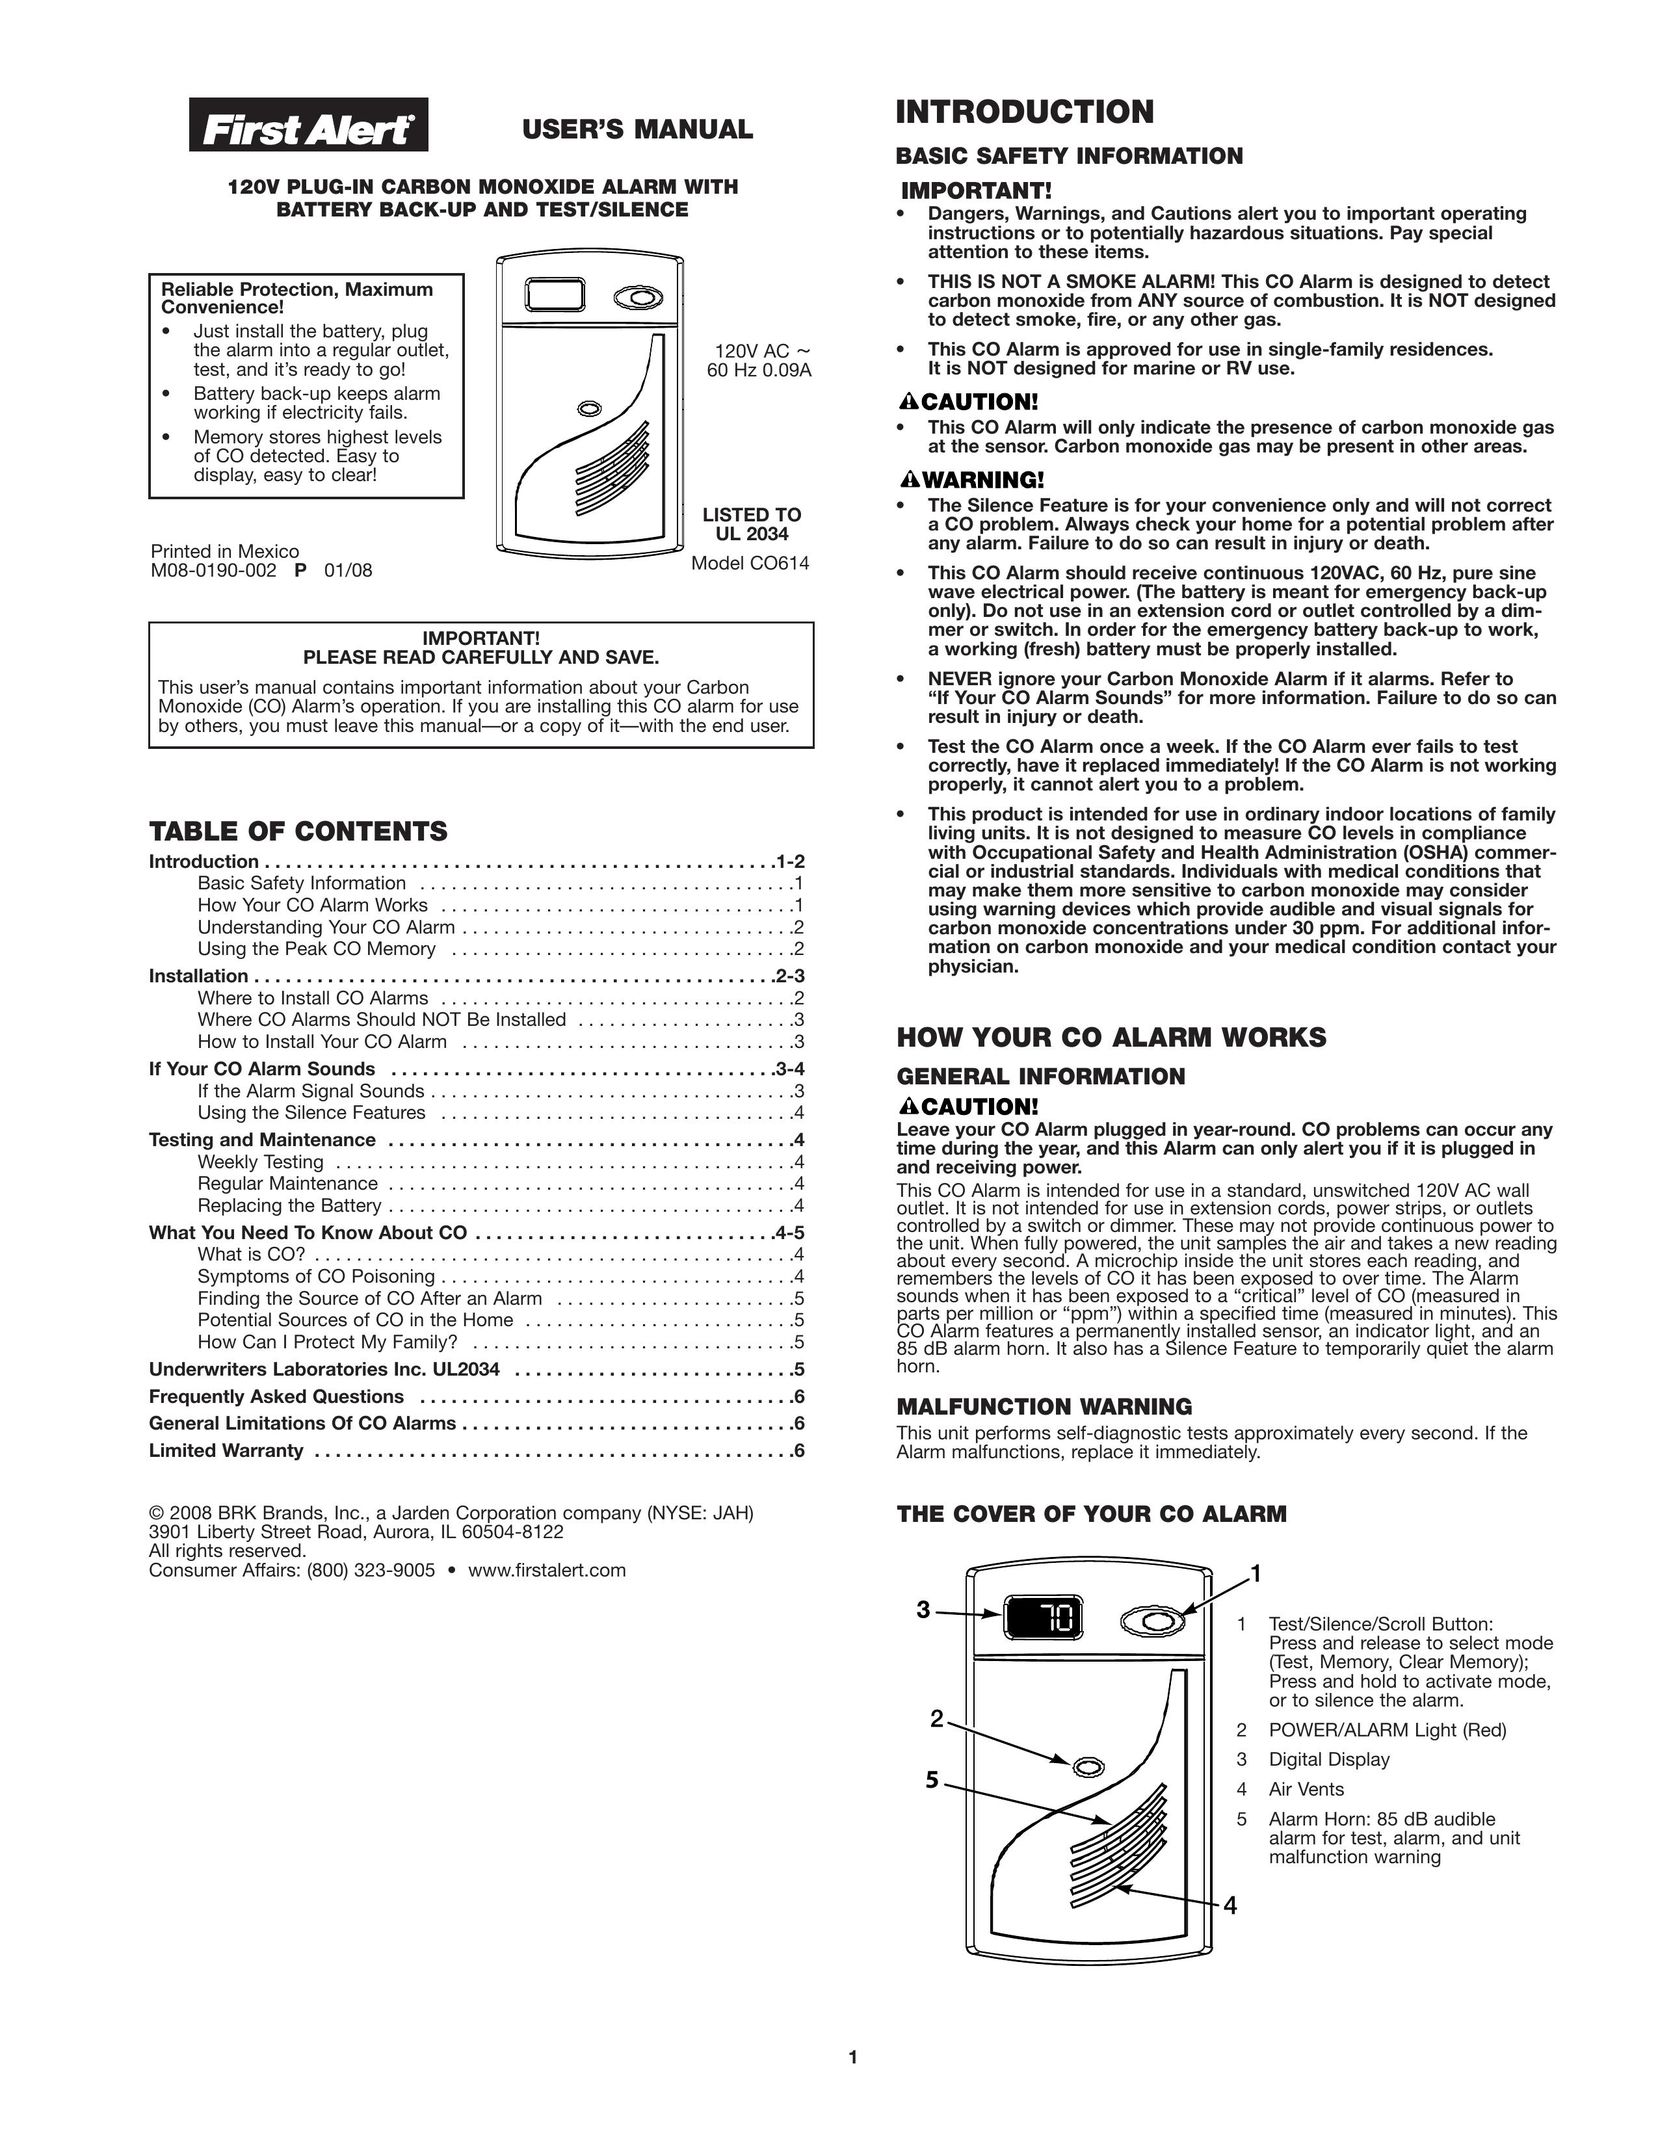 First Alert co614 Carbon Monoxide Alarm User Manual